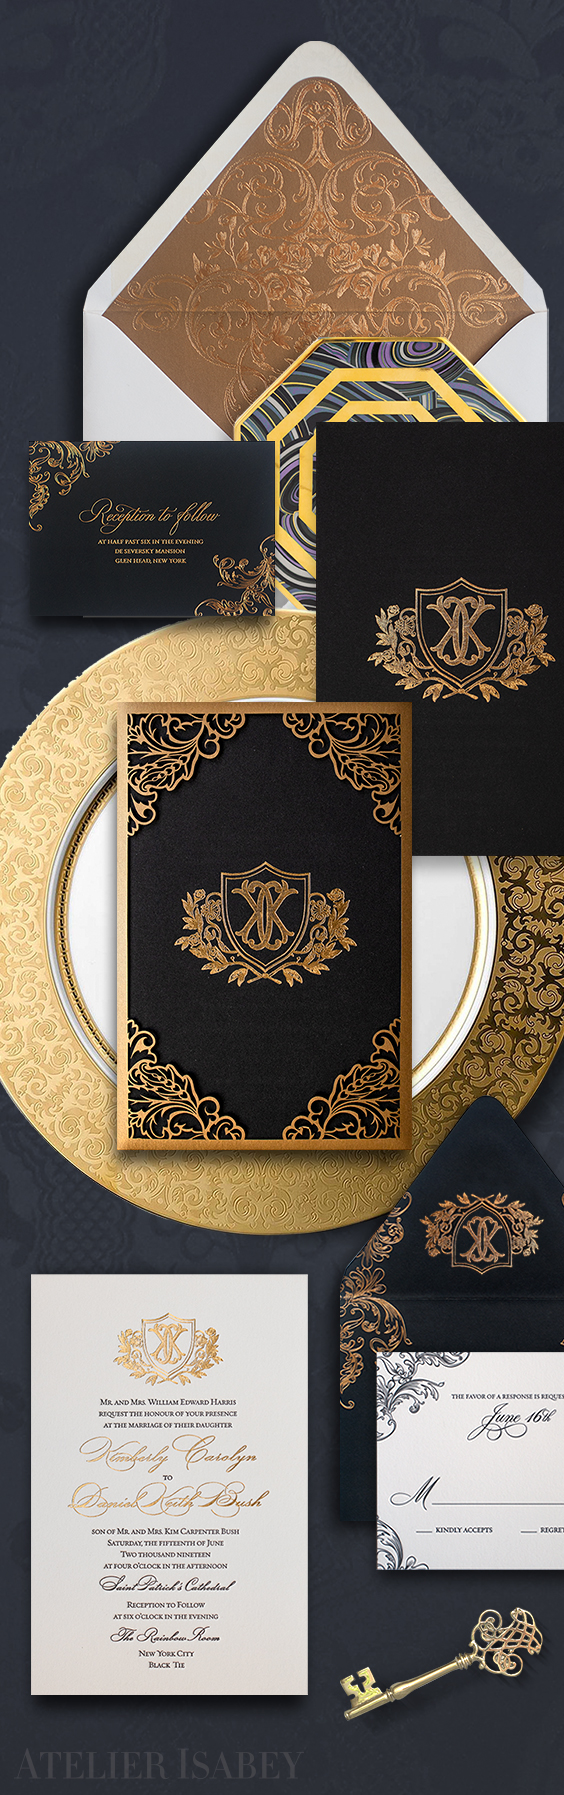 Ornate black and gold wedding invitation